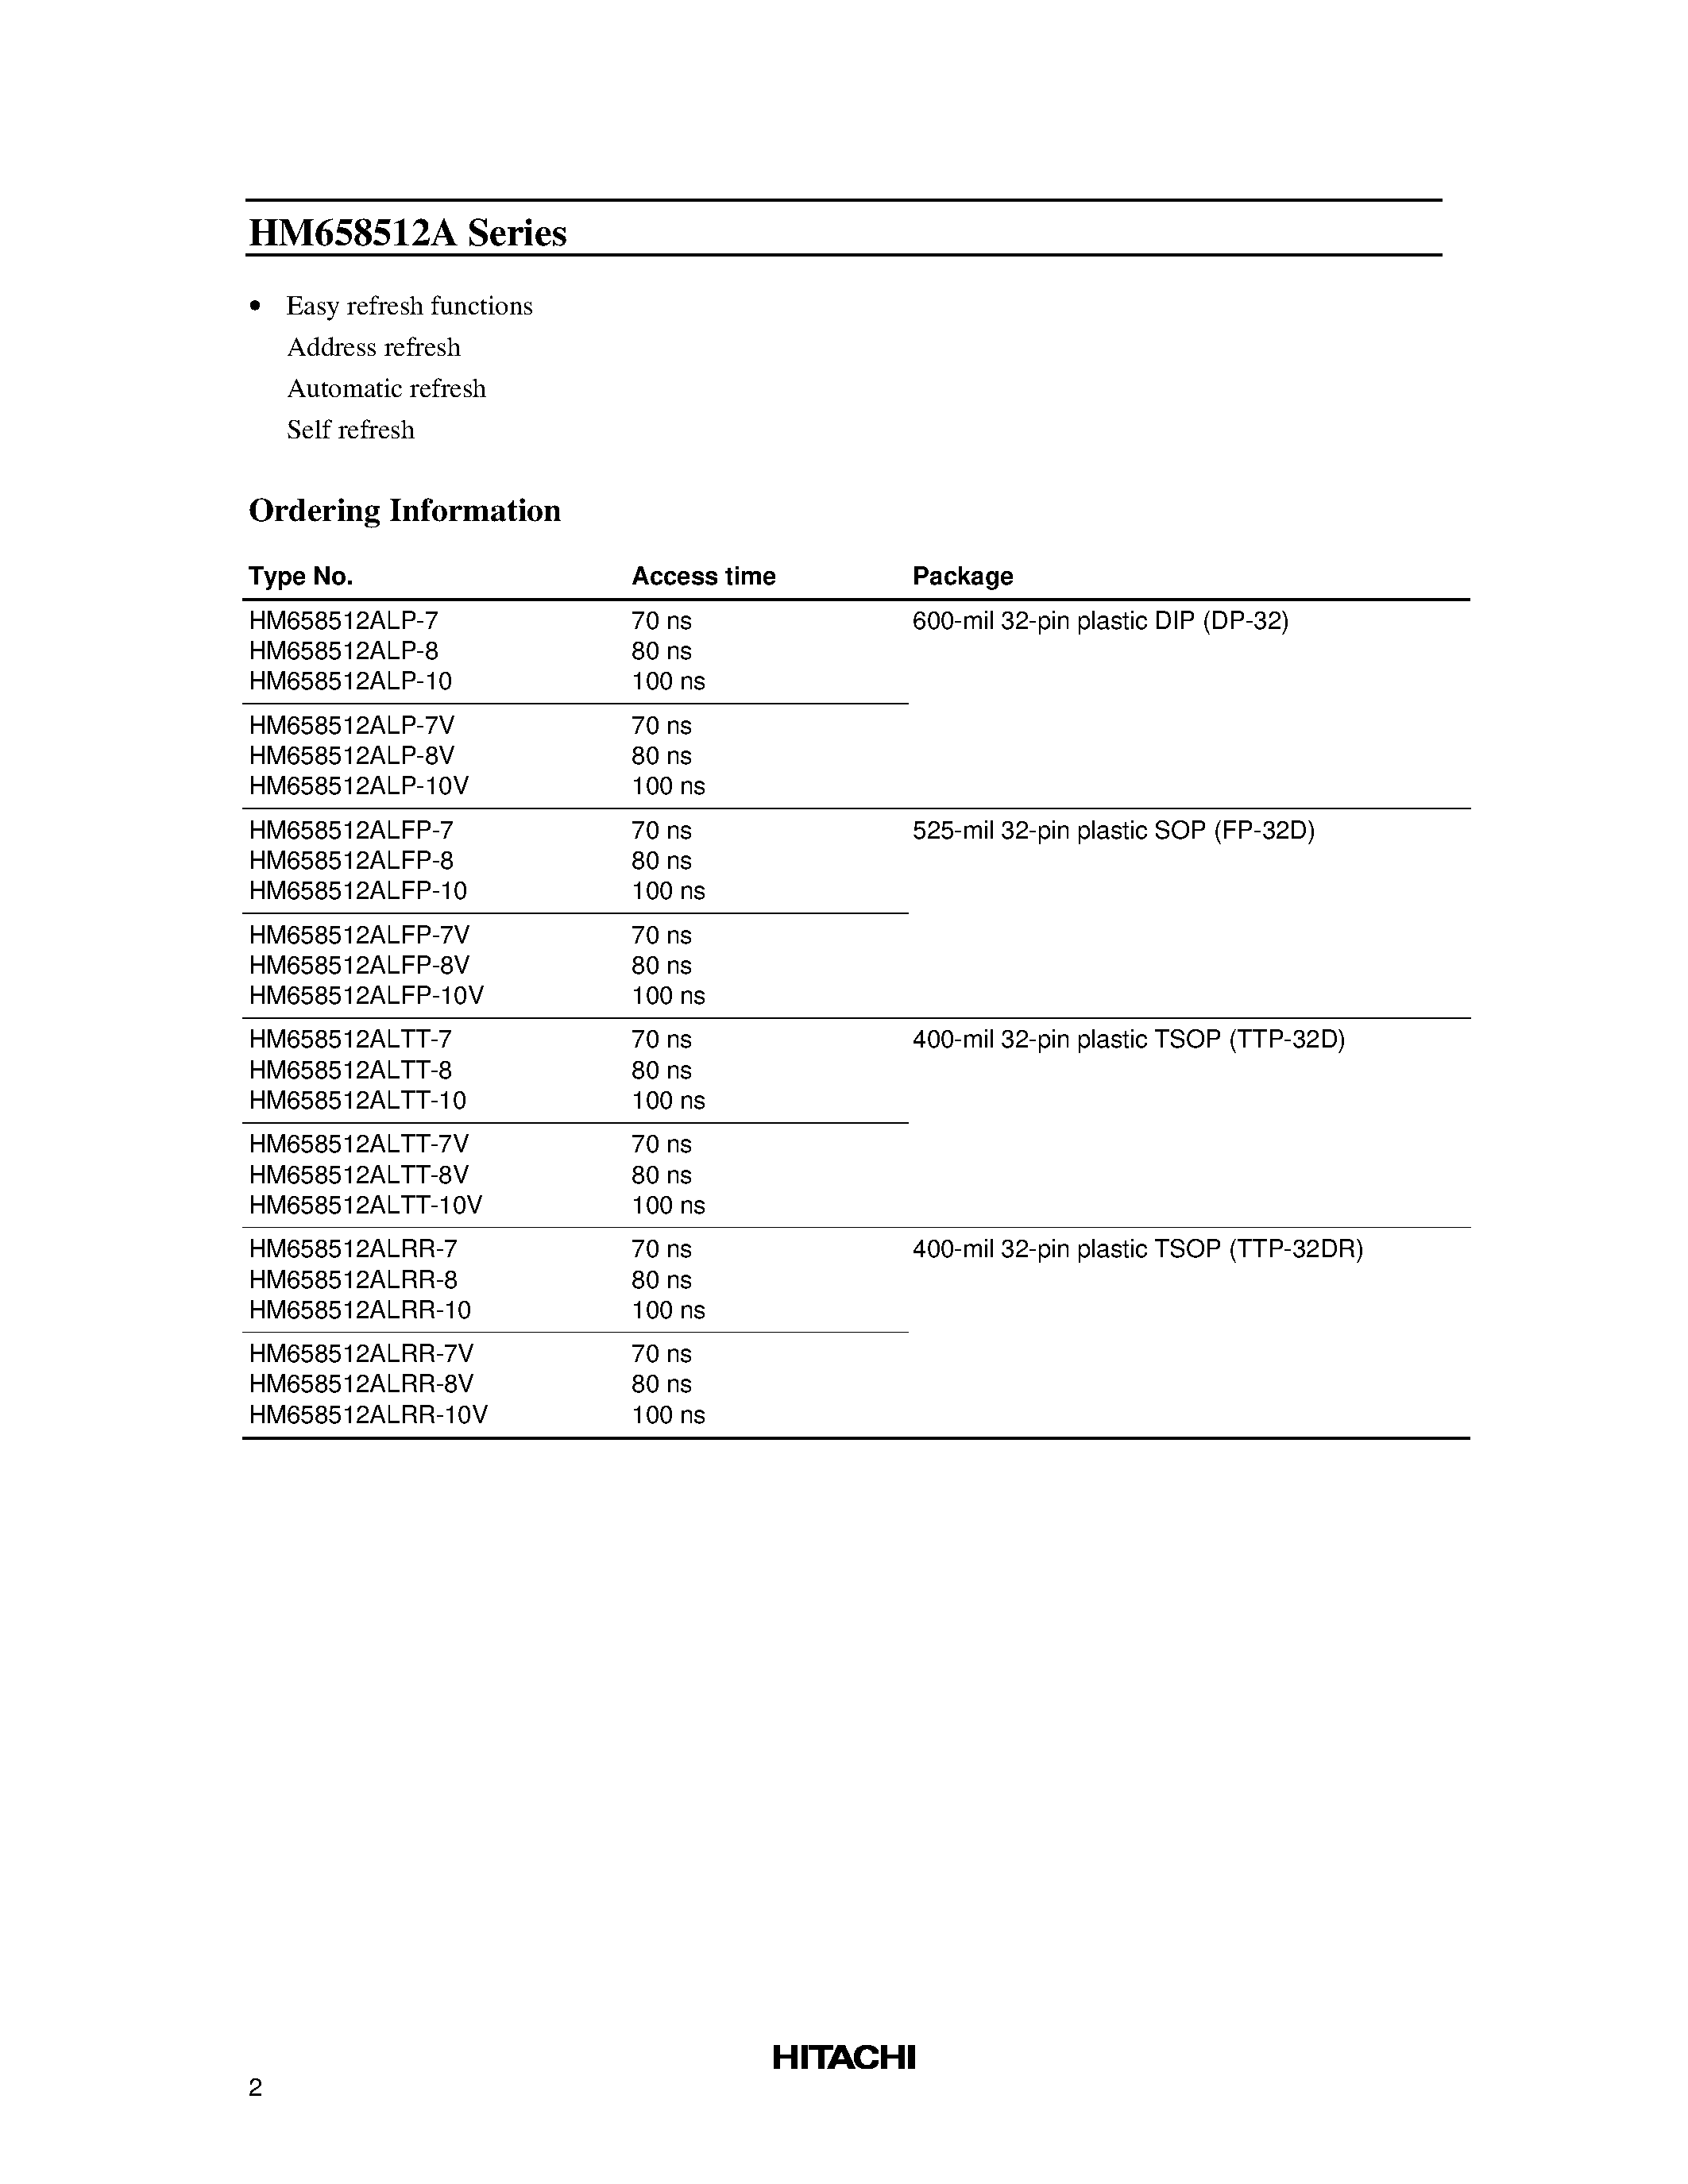 Datasheet HM658512ALTT-8 - 4 M PSRAM (512-kword x 8-bit) 2 k Refresh page 2